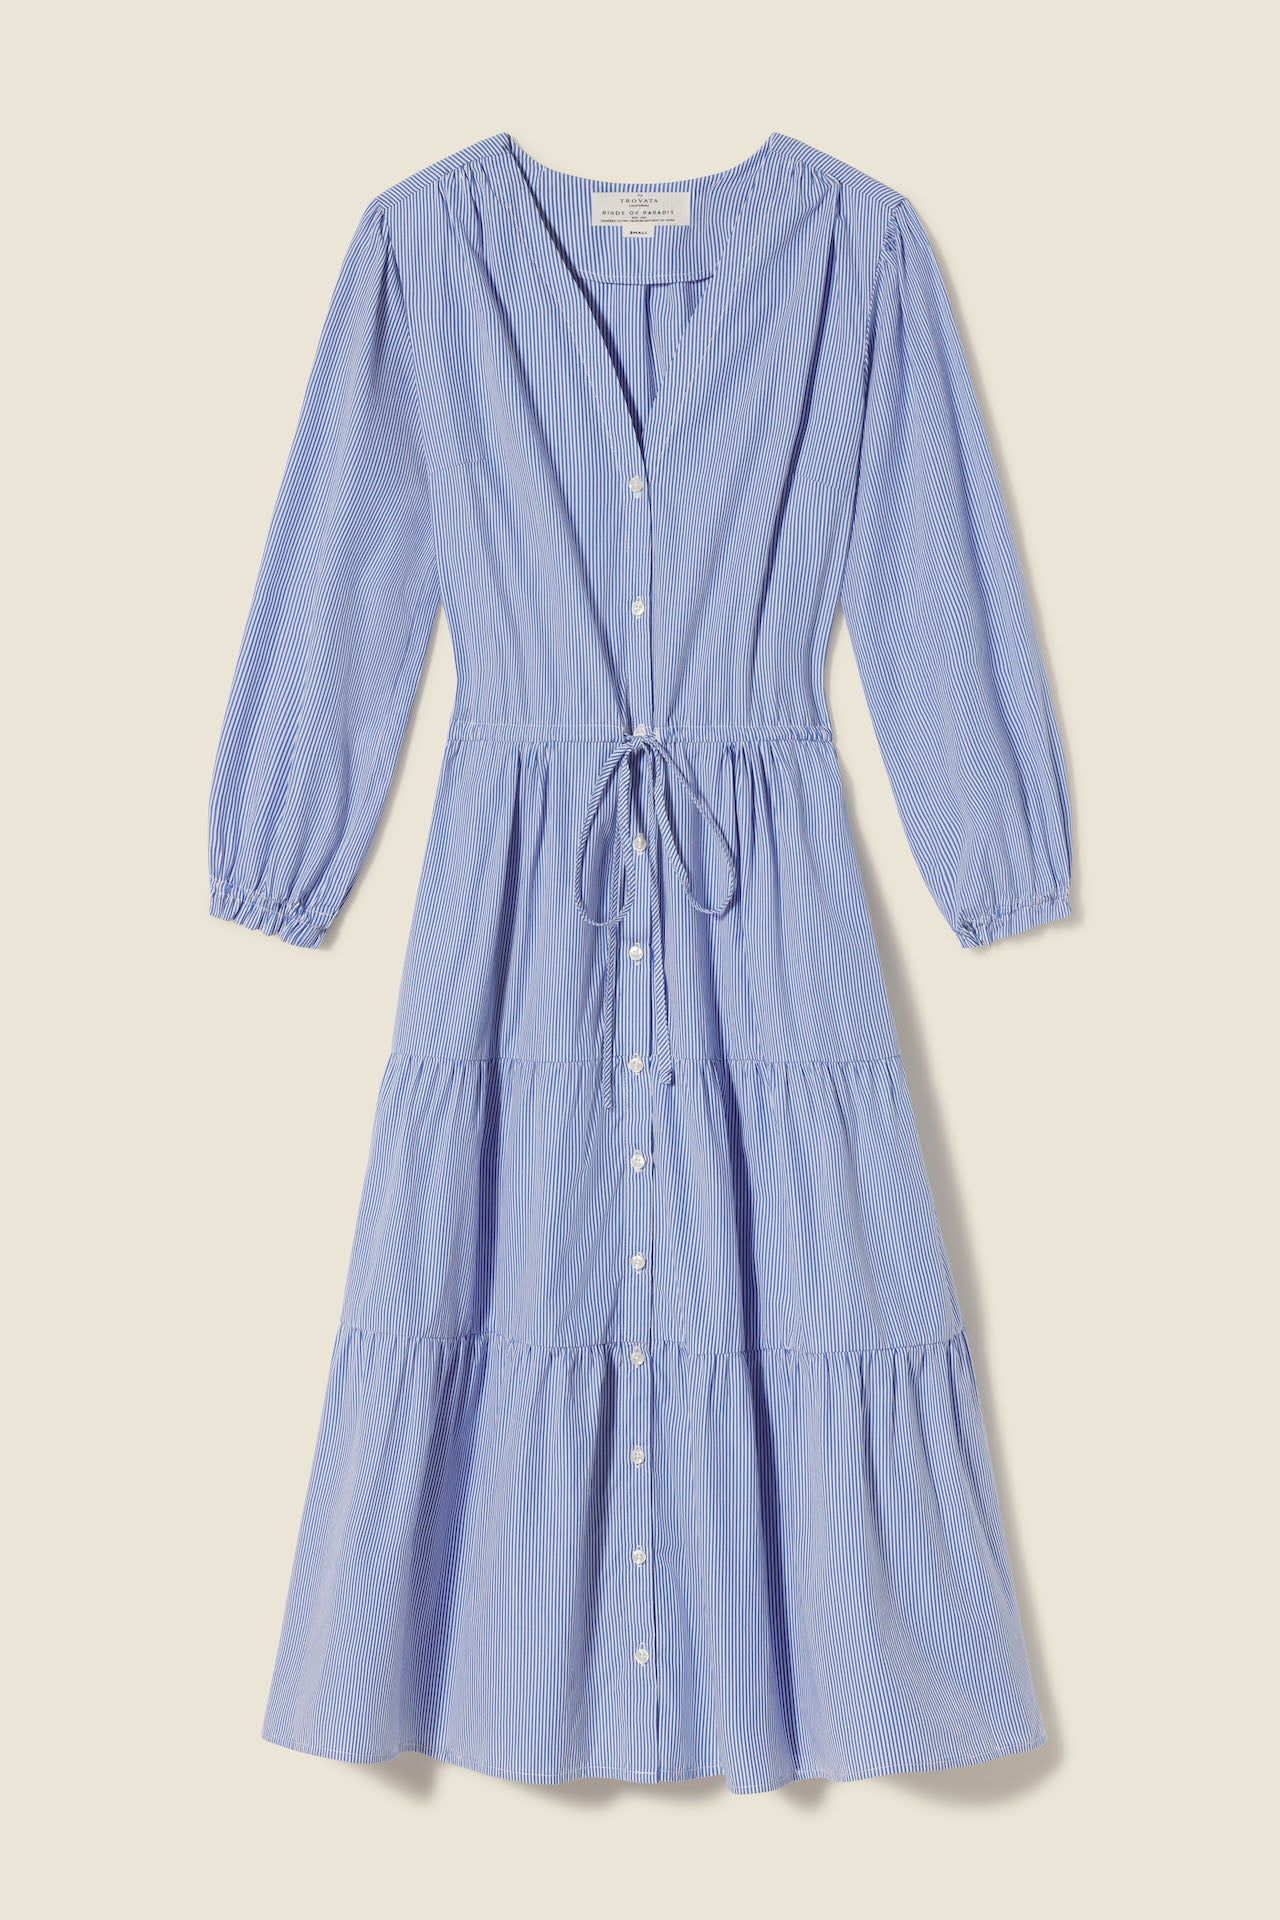 Ainsley "B" Dress Blue/White Stripe | TROVATA